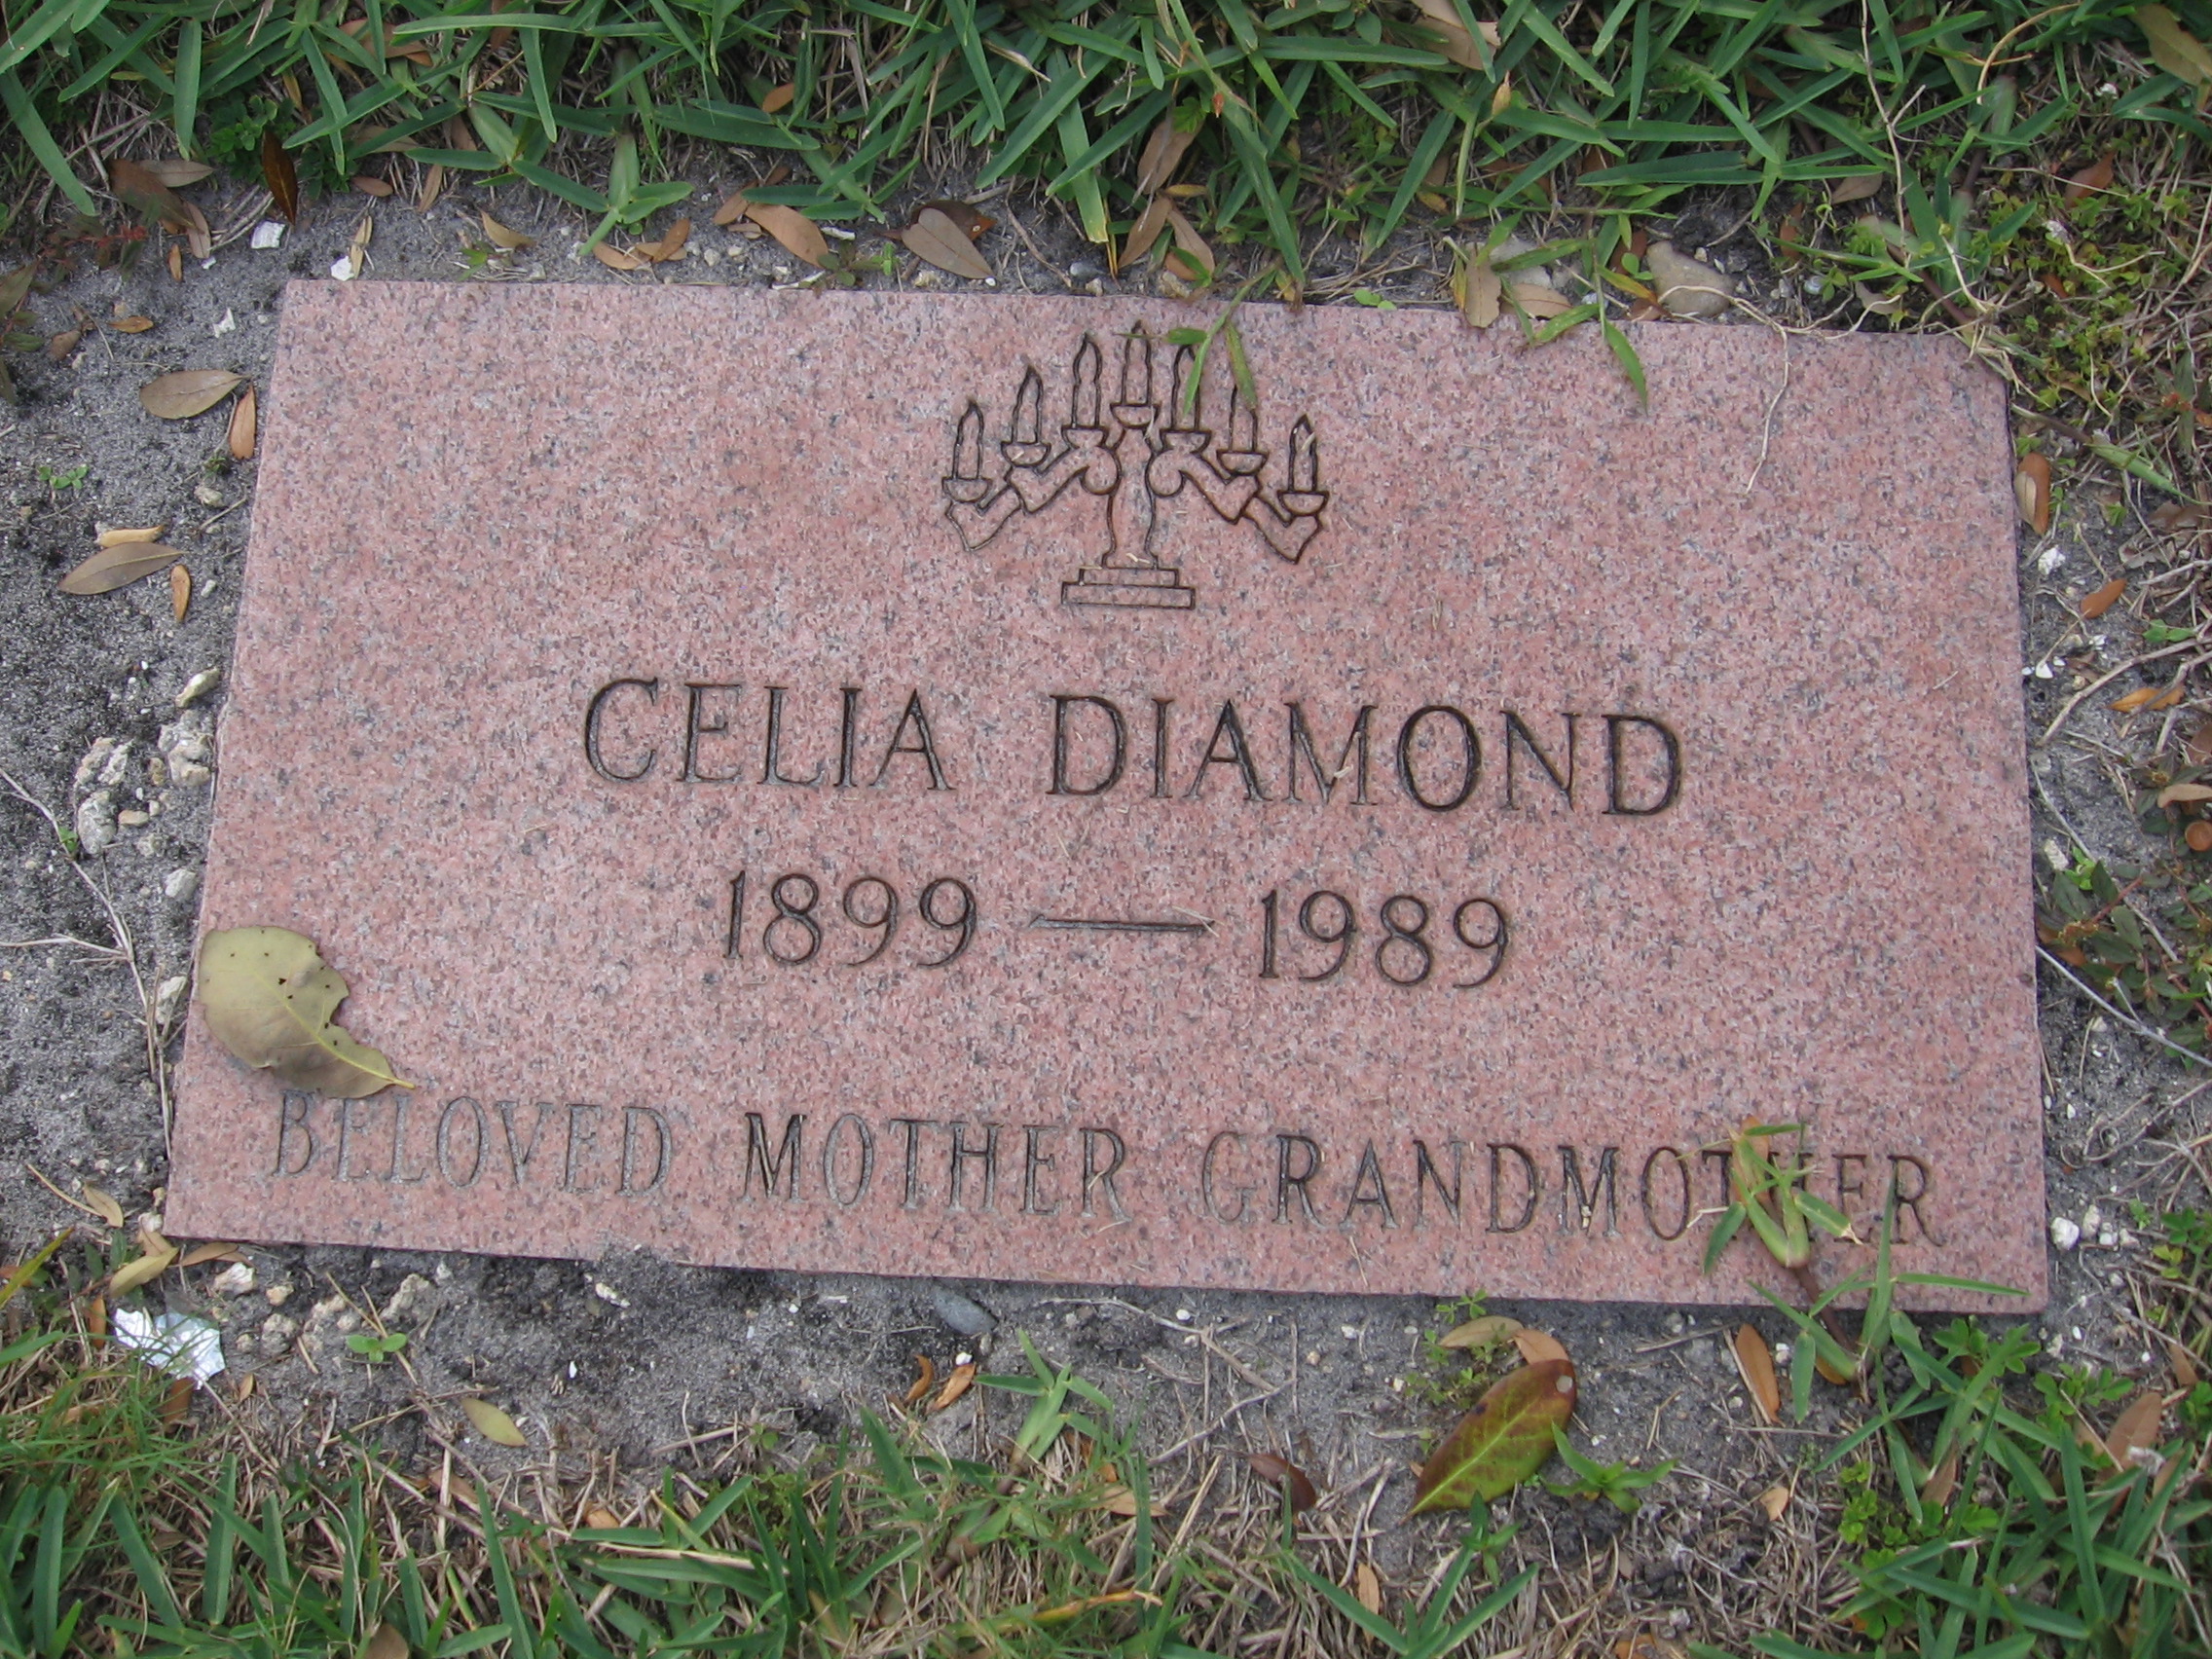 Celia Diamond